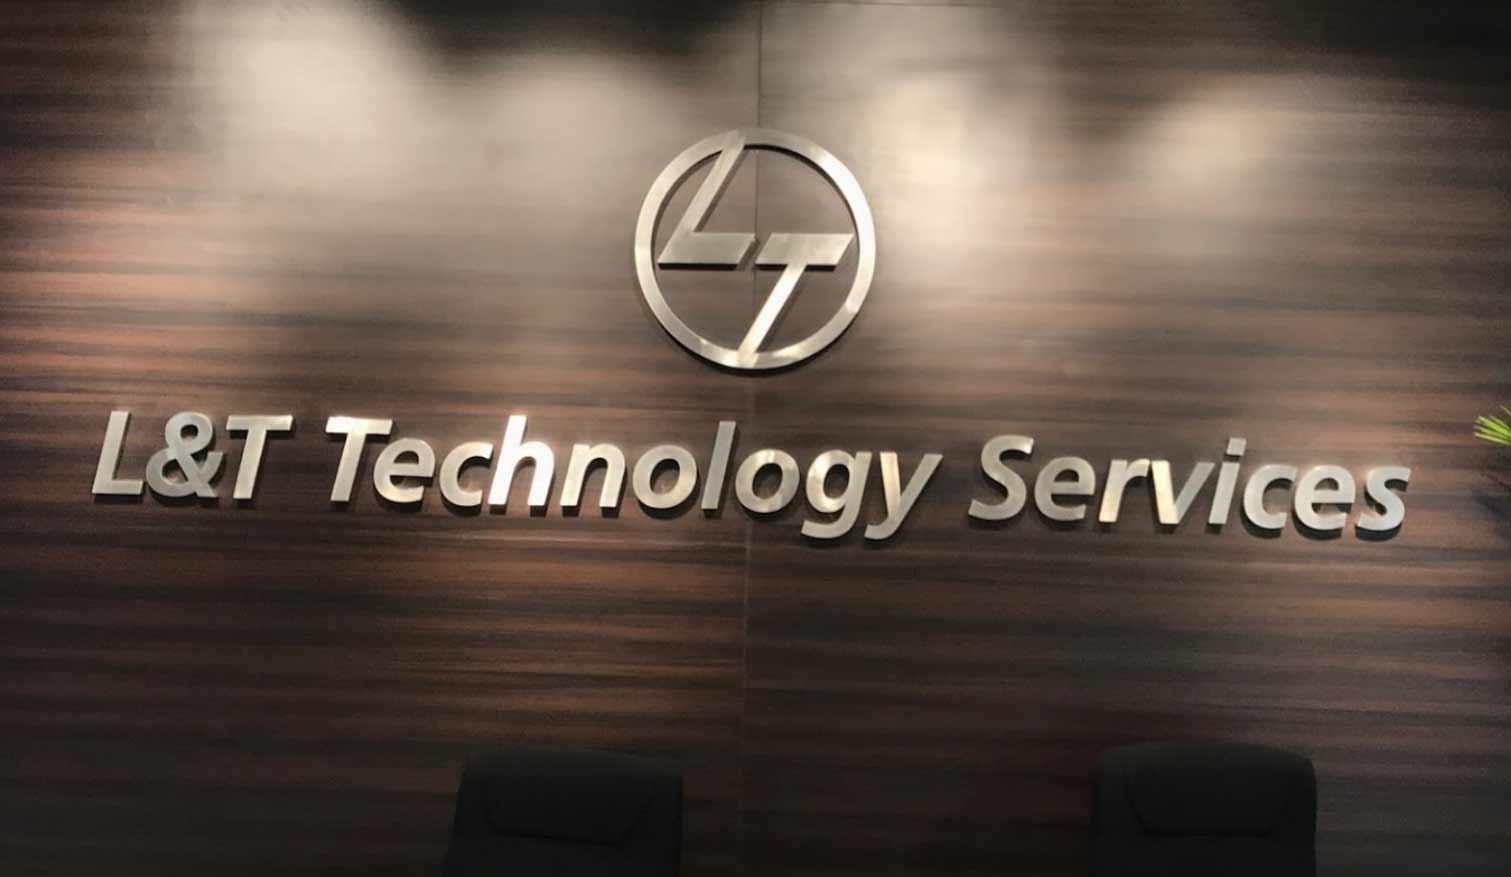 L&T Technology Services plans to develop state-of-the-art DevX platform